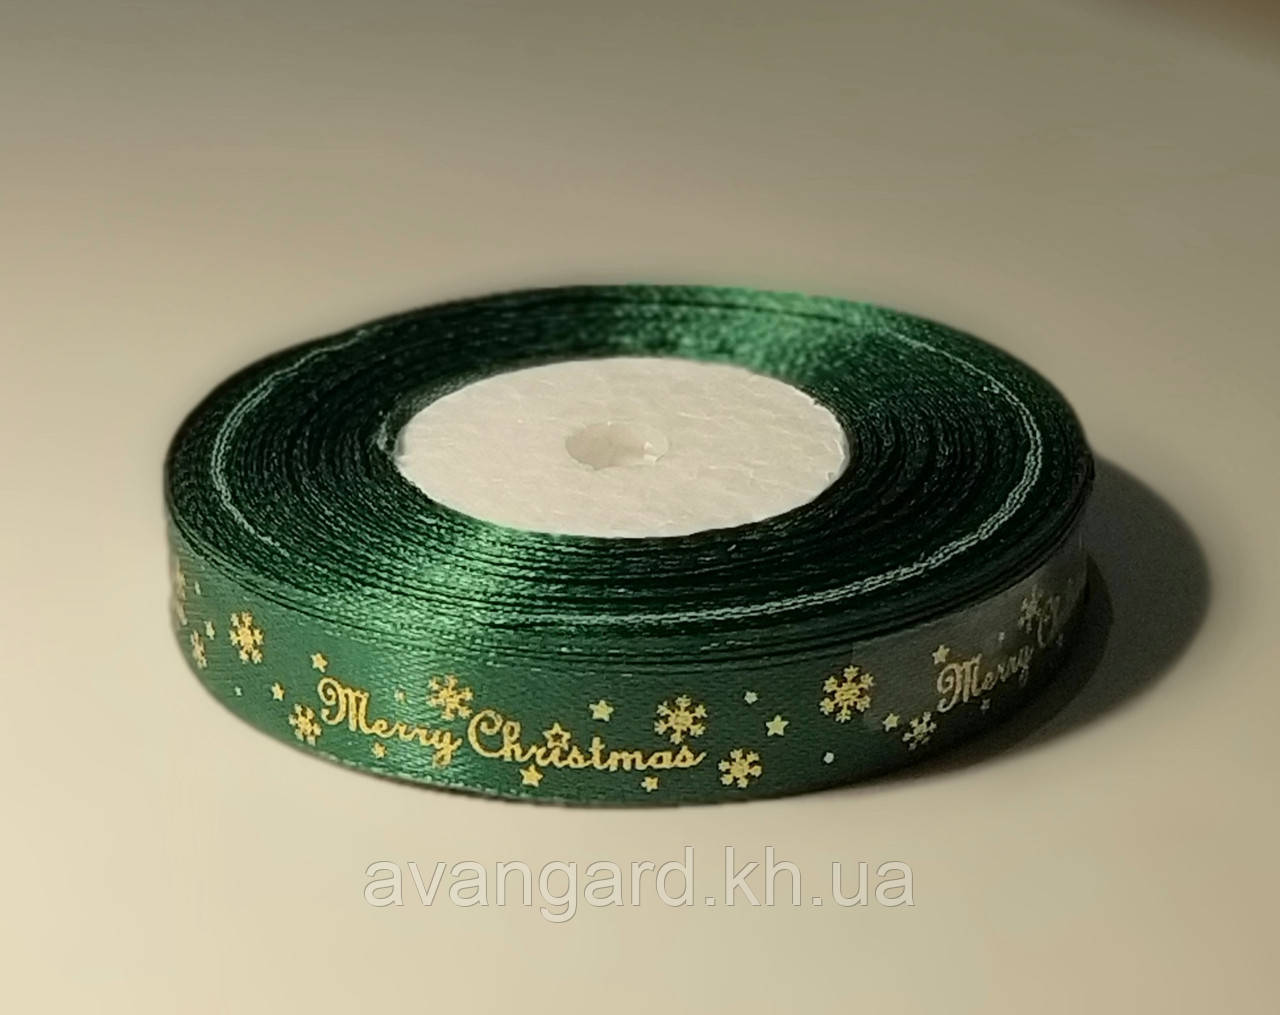 Стрічка атласна Merry Christmas зелена 12 мм